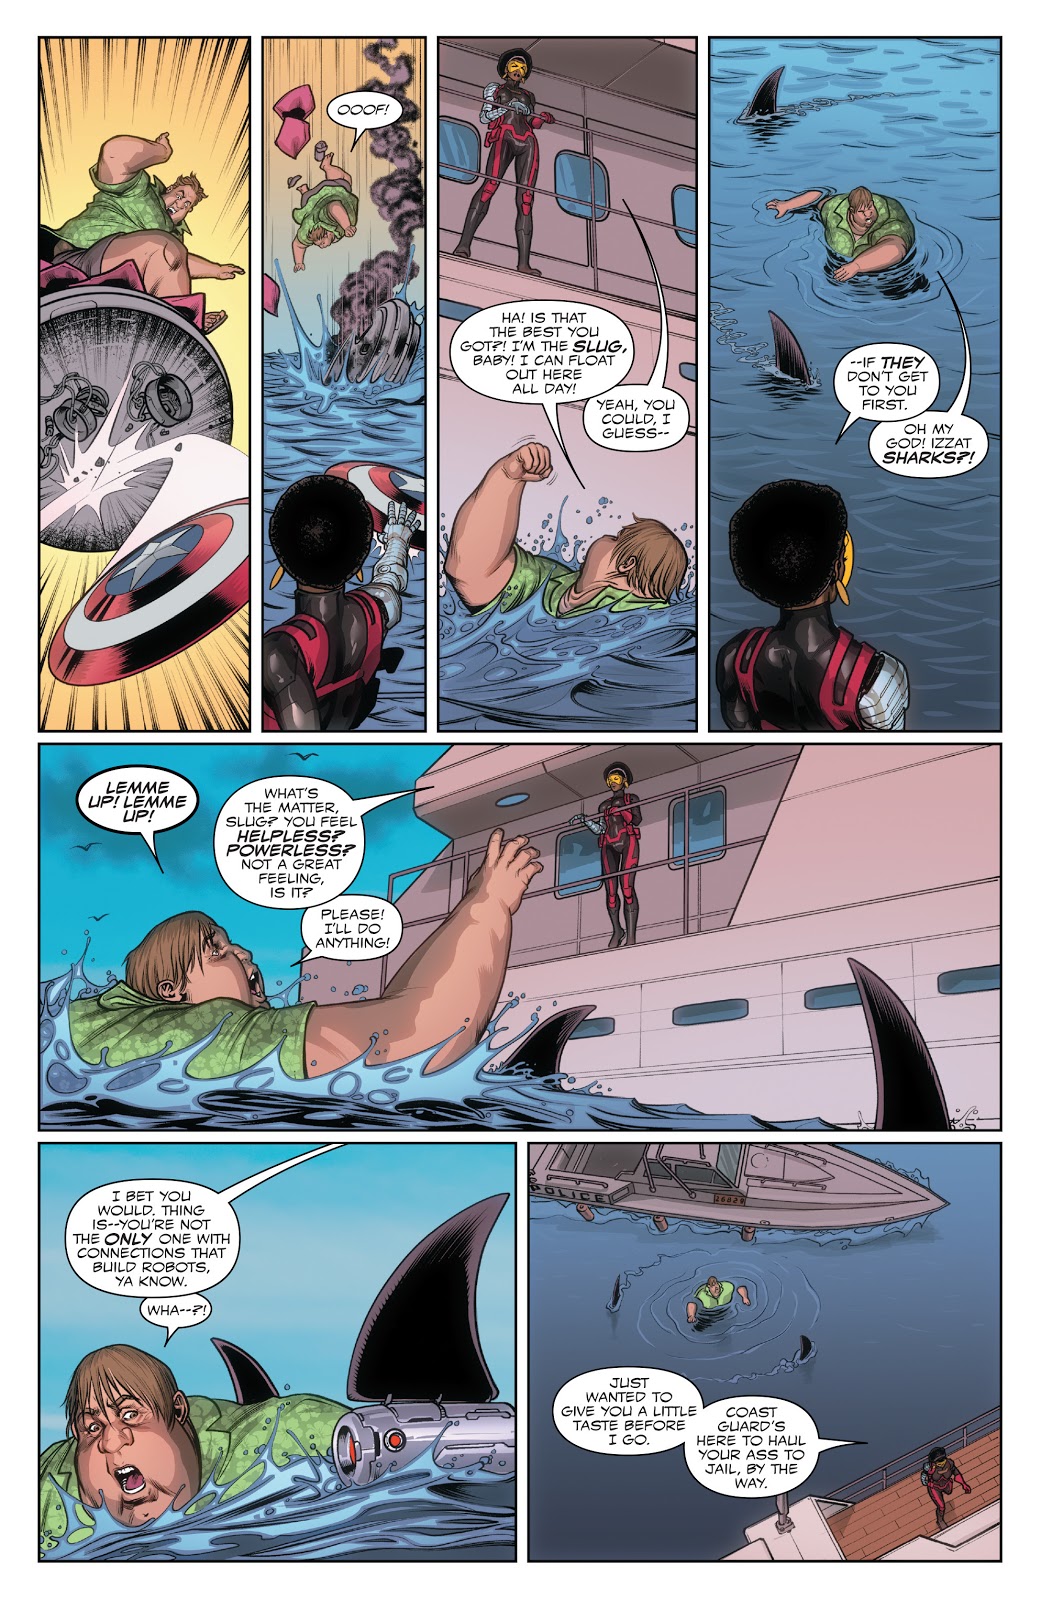 Misty Knight Uses Captain America's Shield